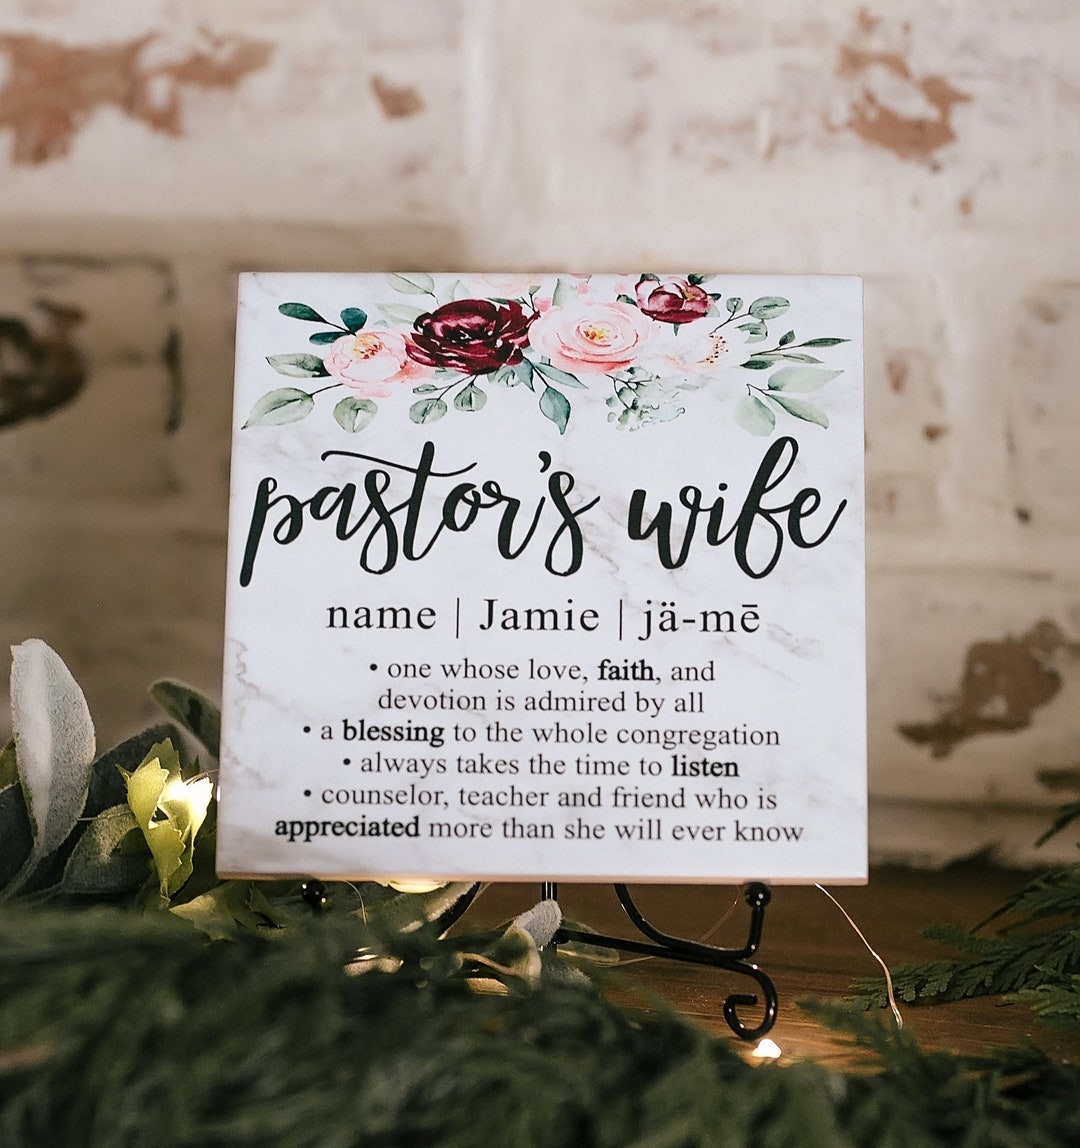 porn video clips inlvolving pastors wives